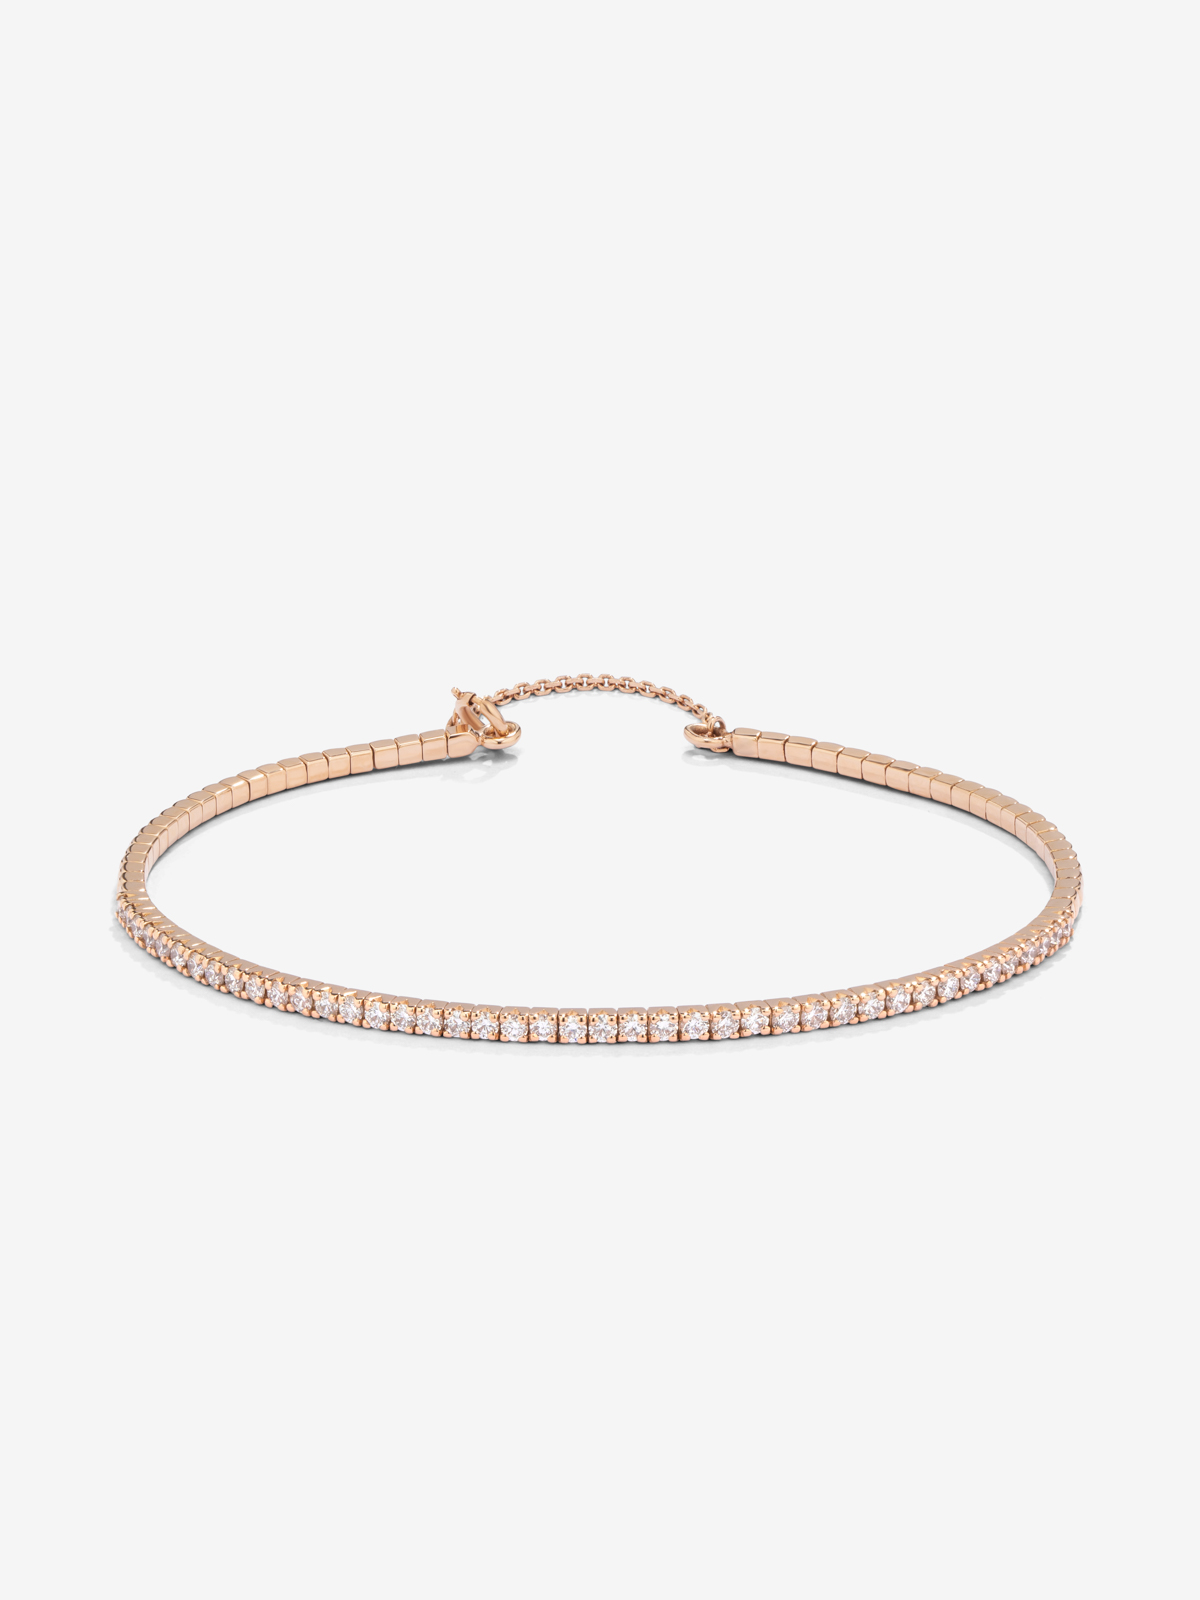 Thin semi-rigid 18K rose gold bracelet with diamonds